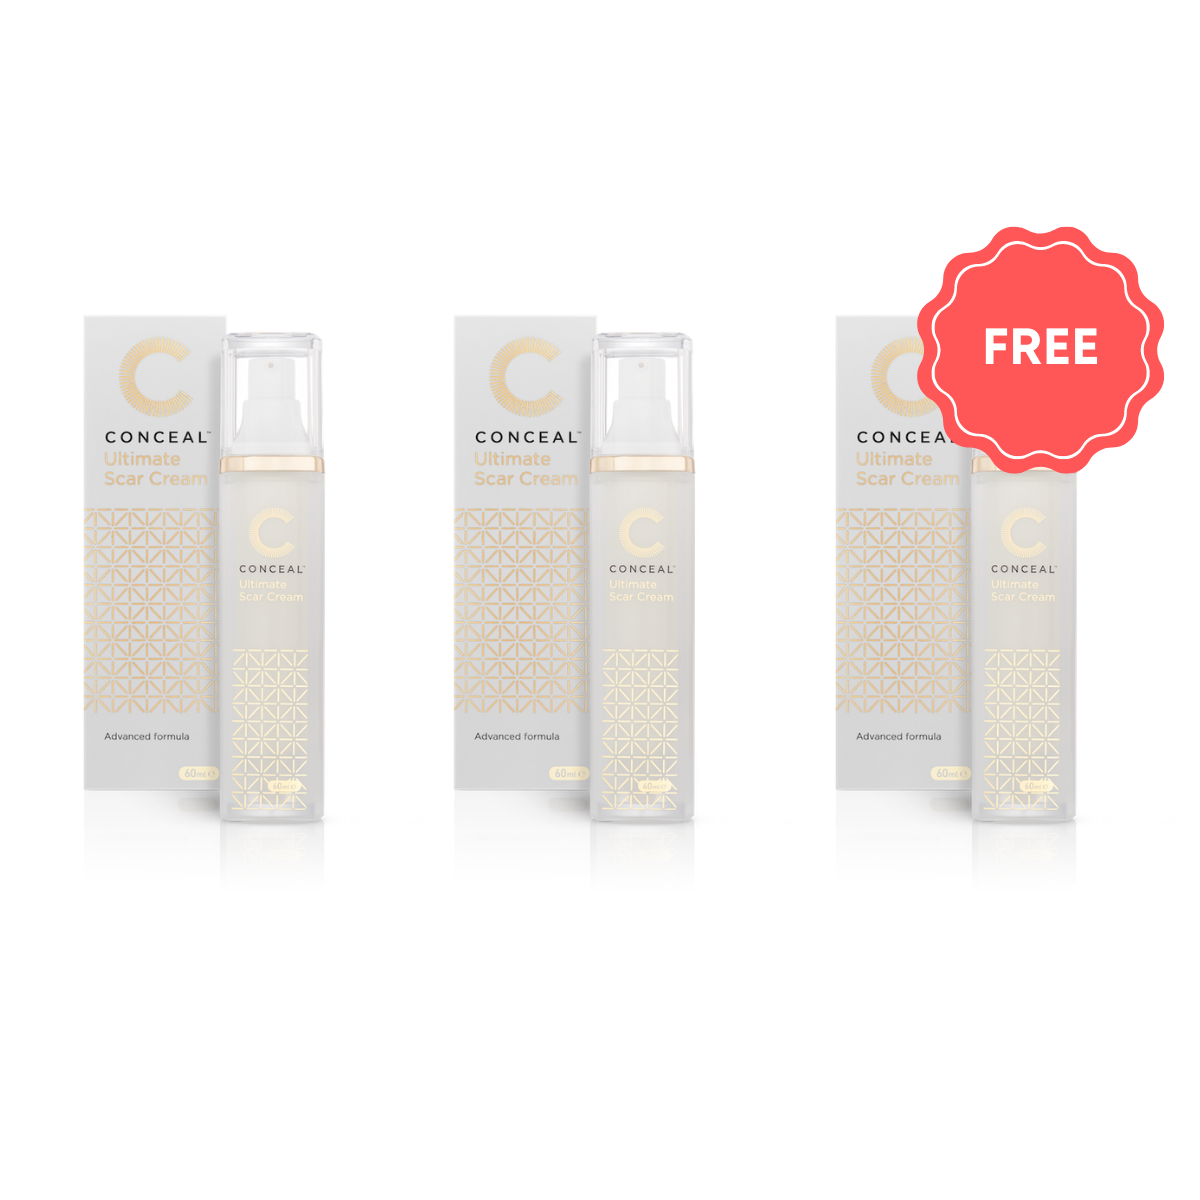 Conceal Ultimate Scar Cream™ - Buy 2 Get 1 Free!